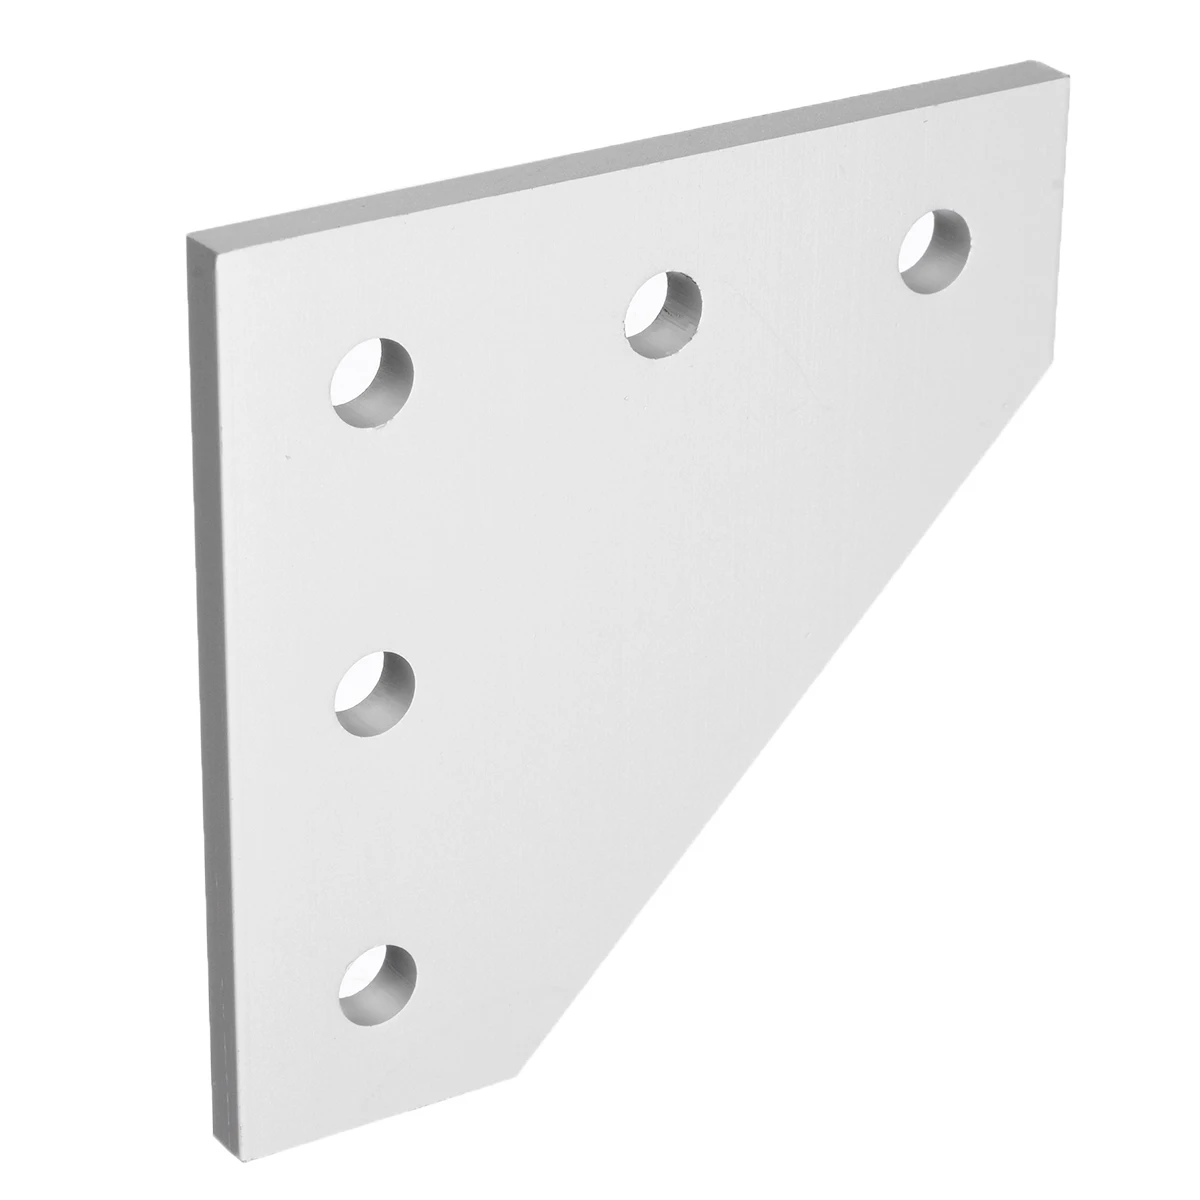 New 5 Hole Sliver Joint Board Corner Angle Bracket 90 Degree For 2020 Aluminum Profile/3D Printer Frame